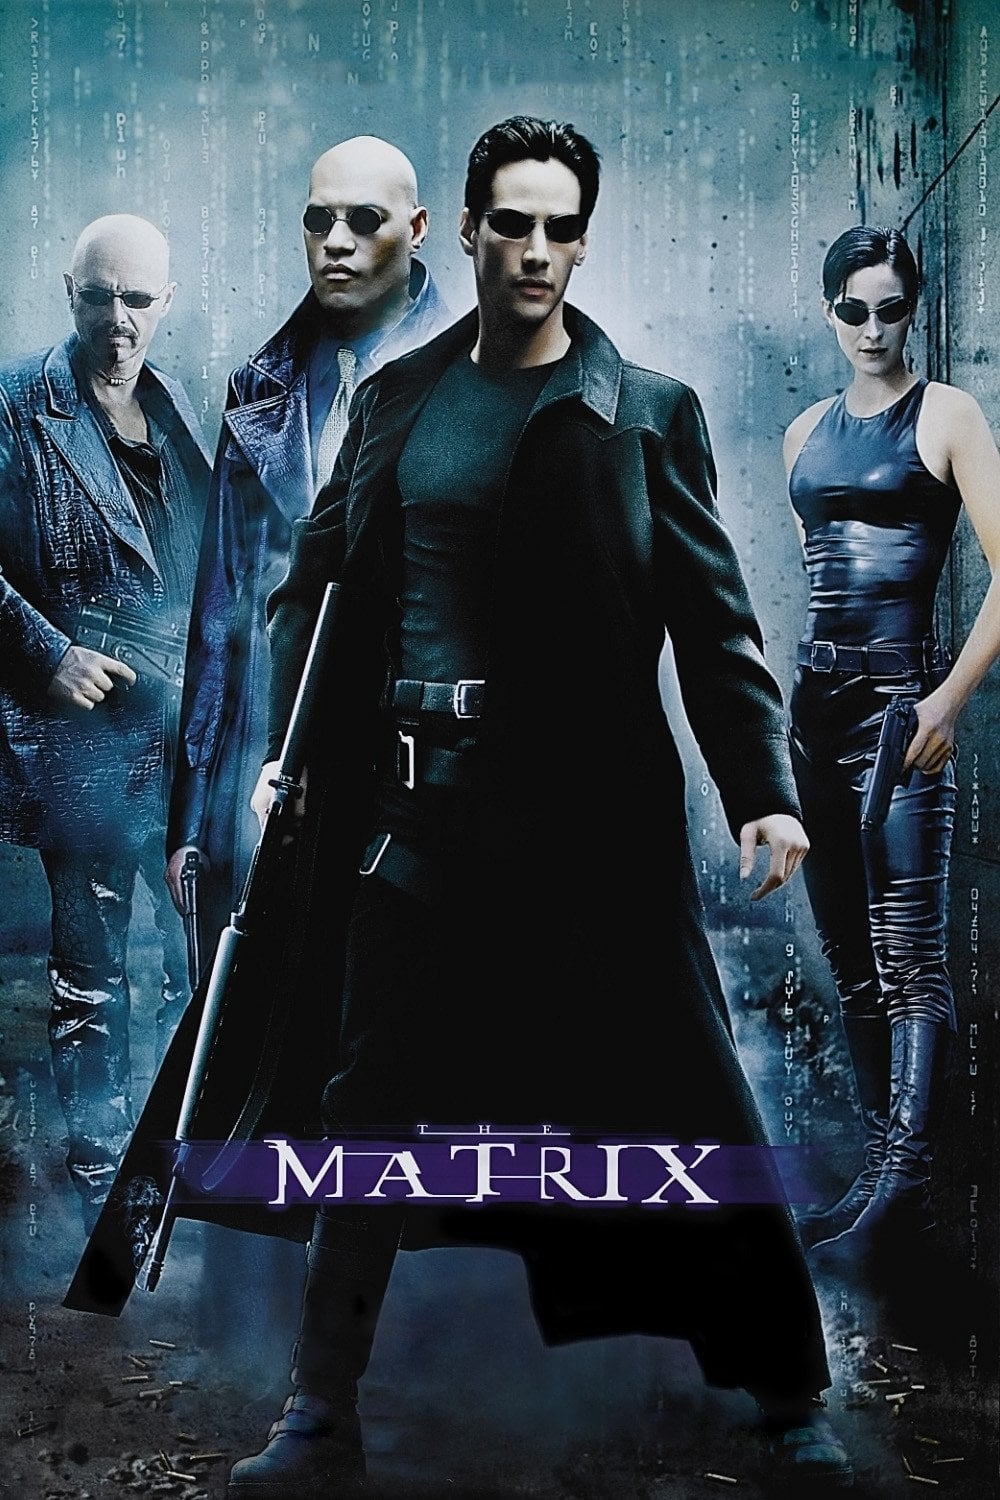 The Matrix POSTER